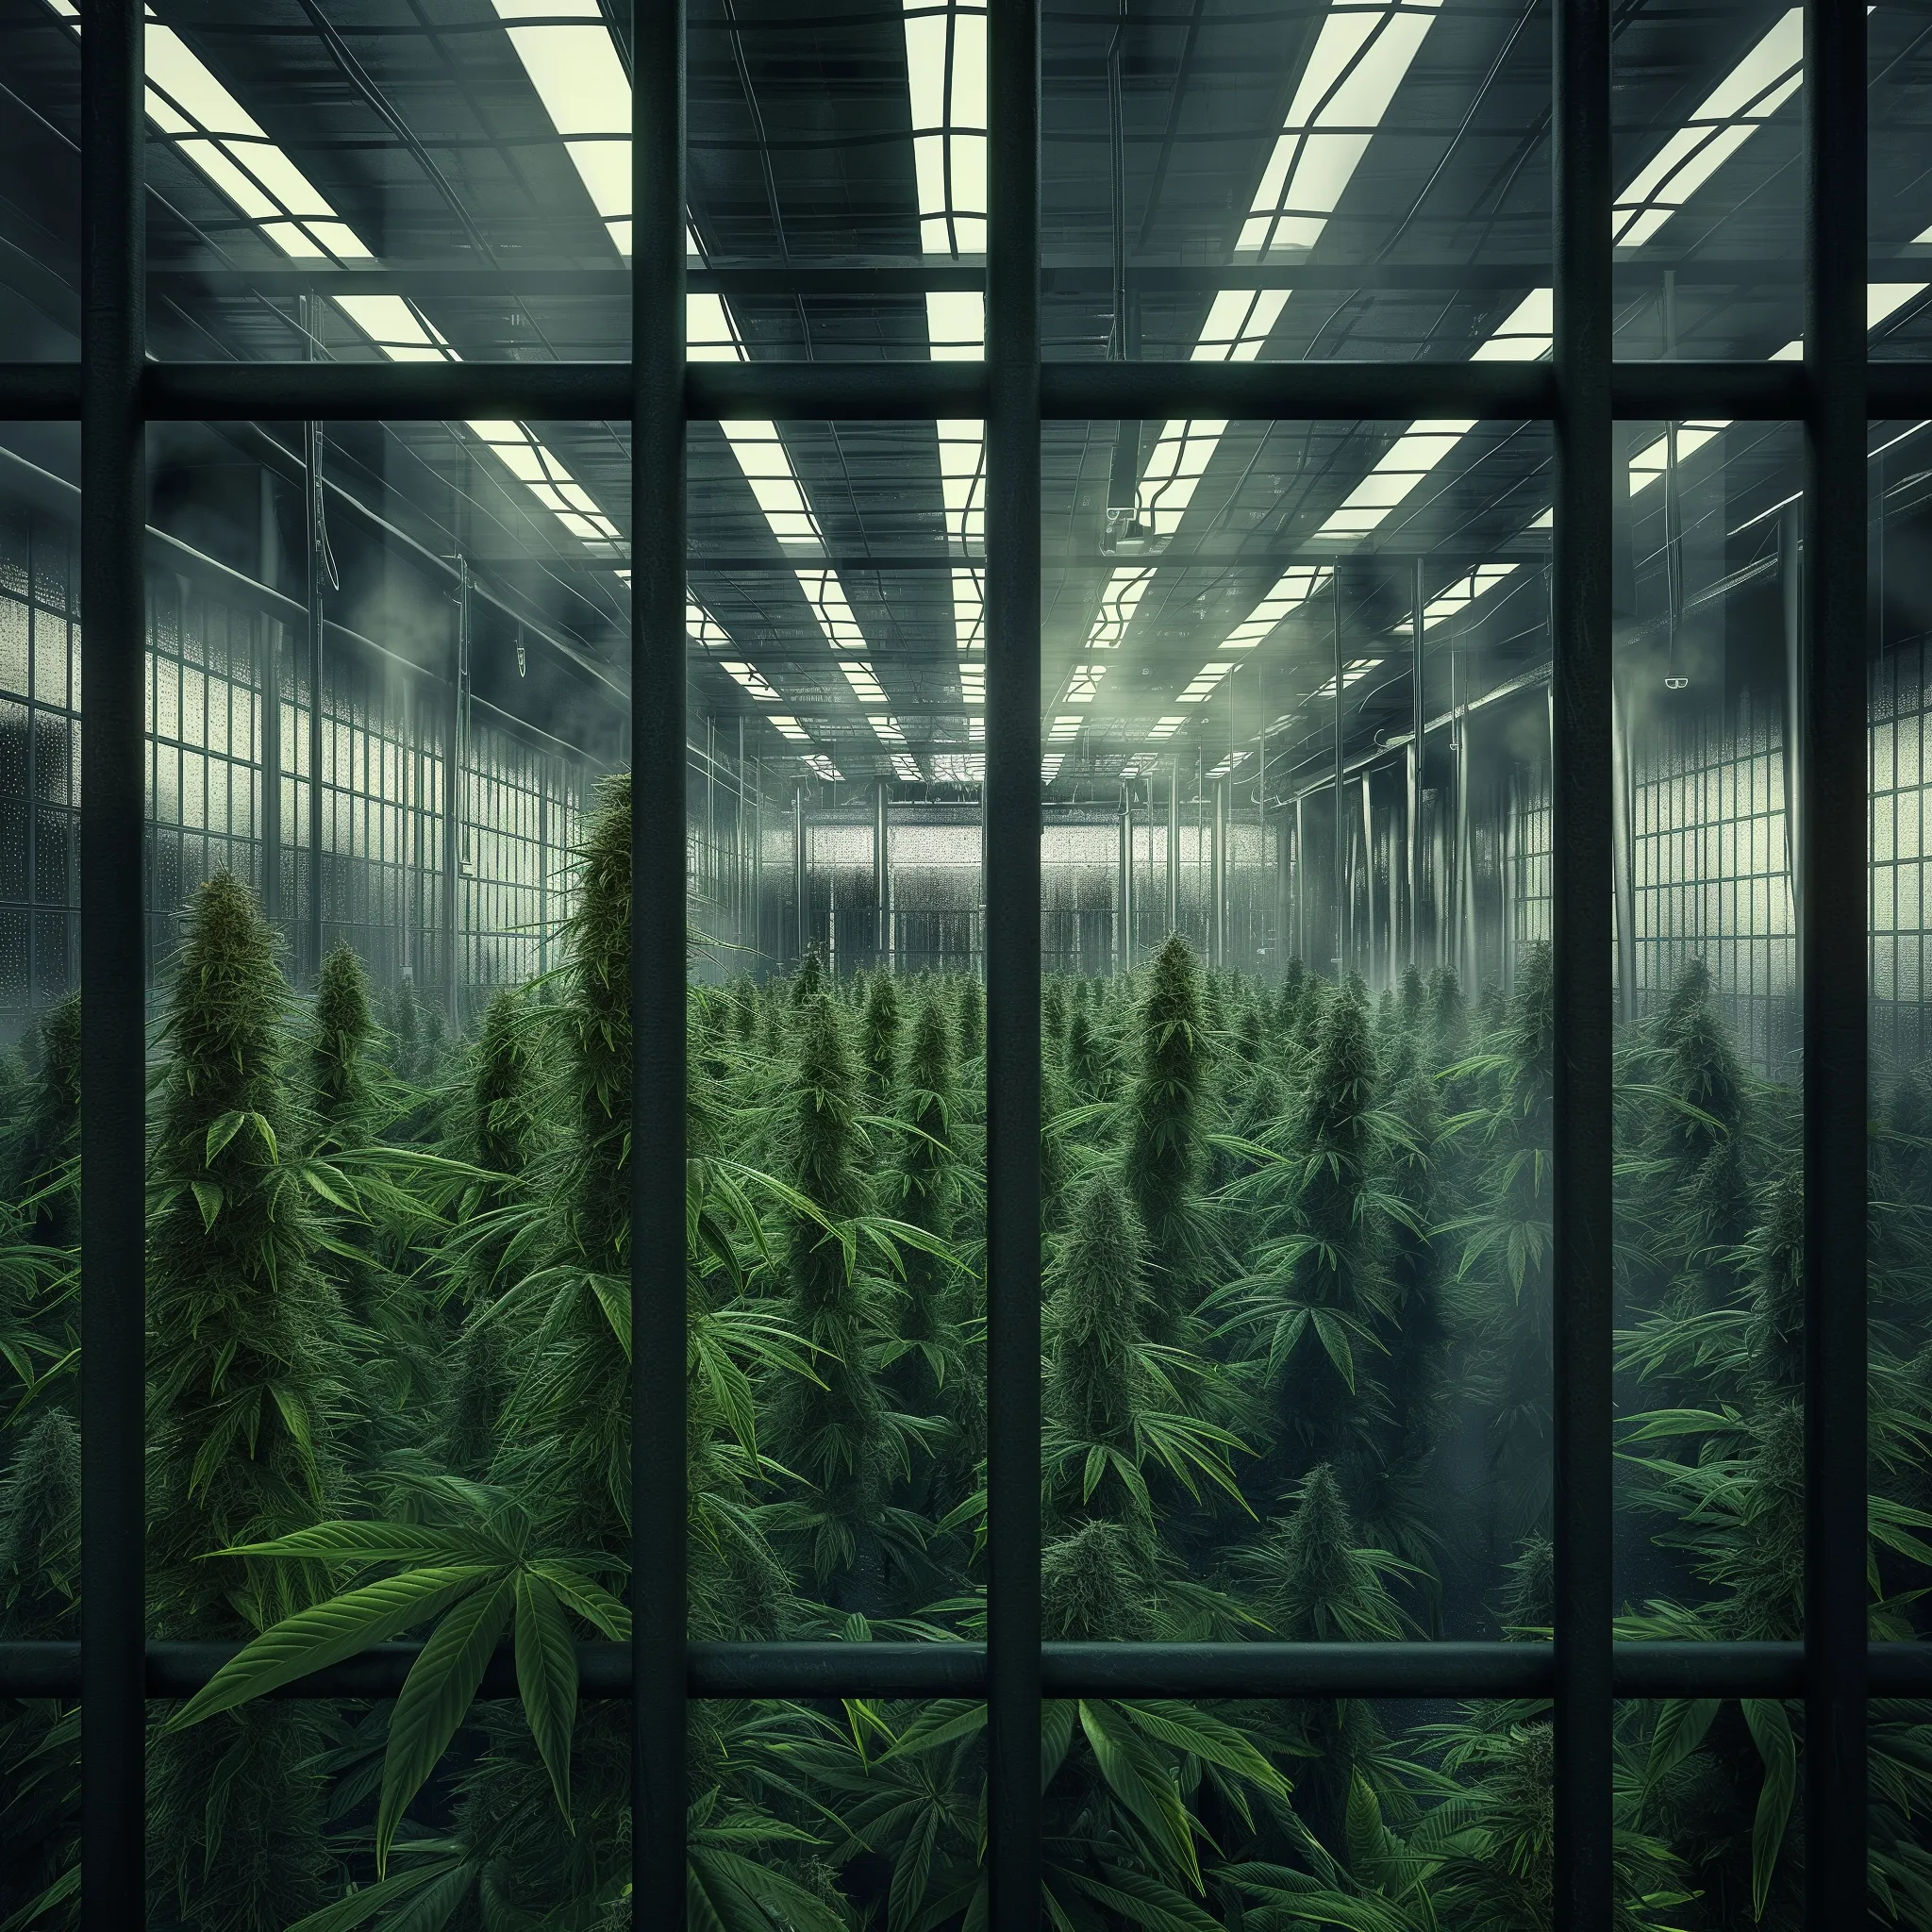 Cannabis plants behind bars